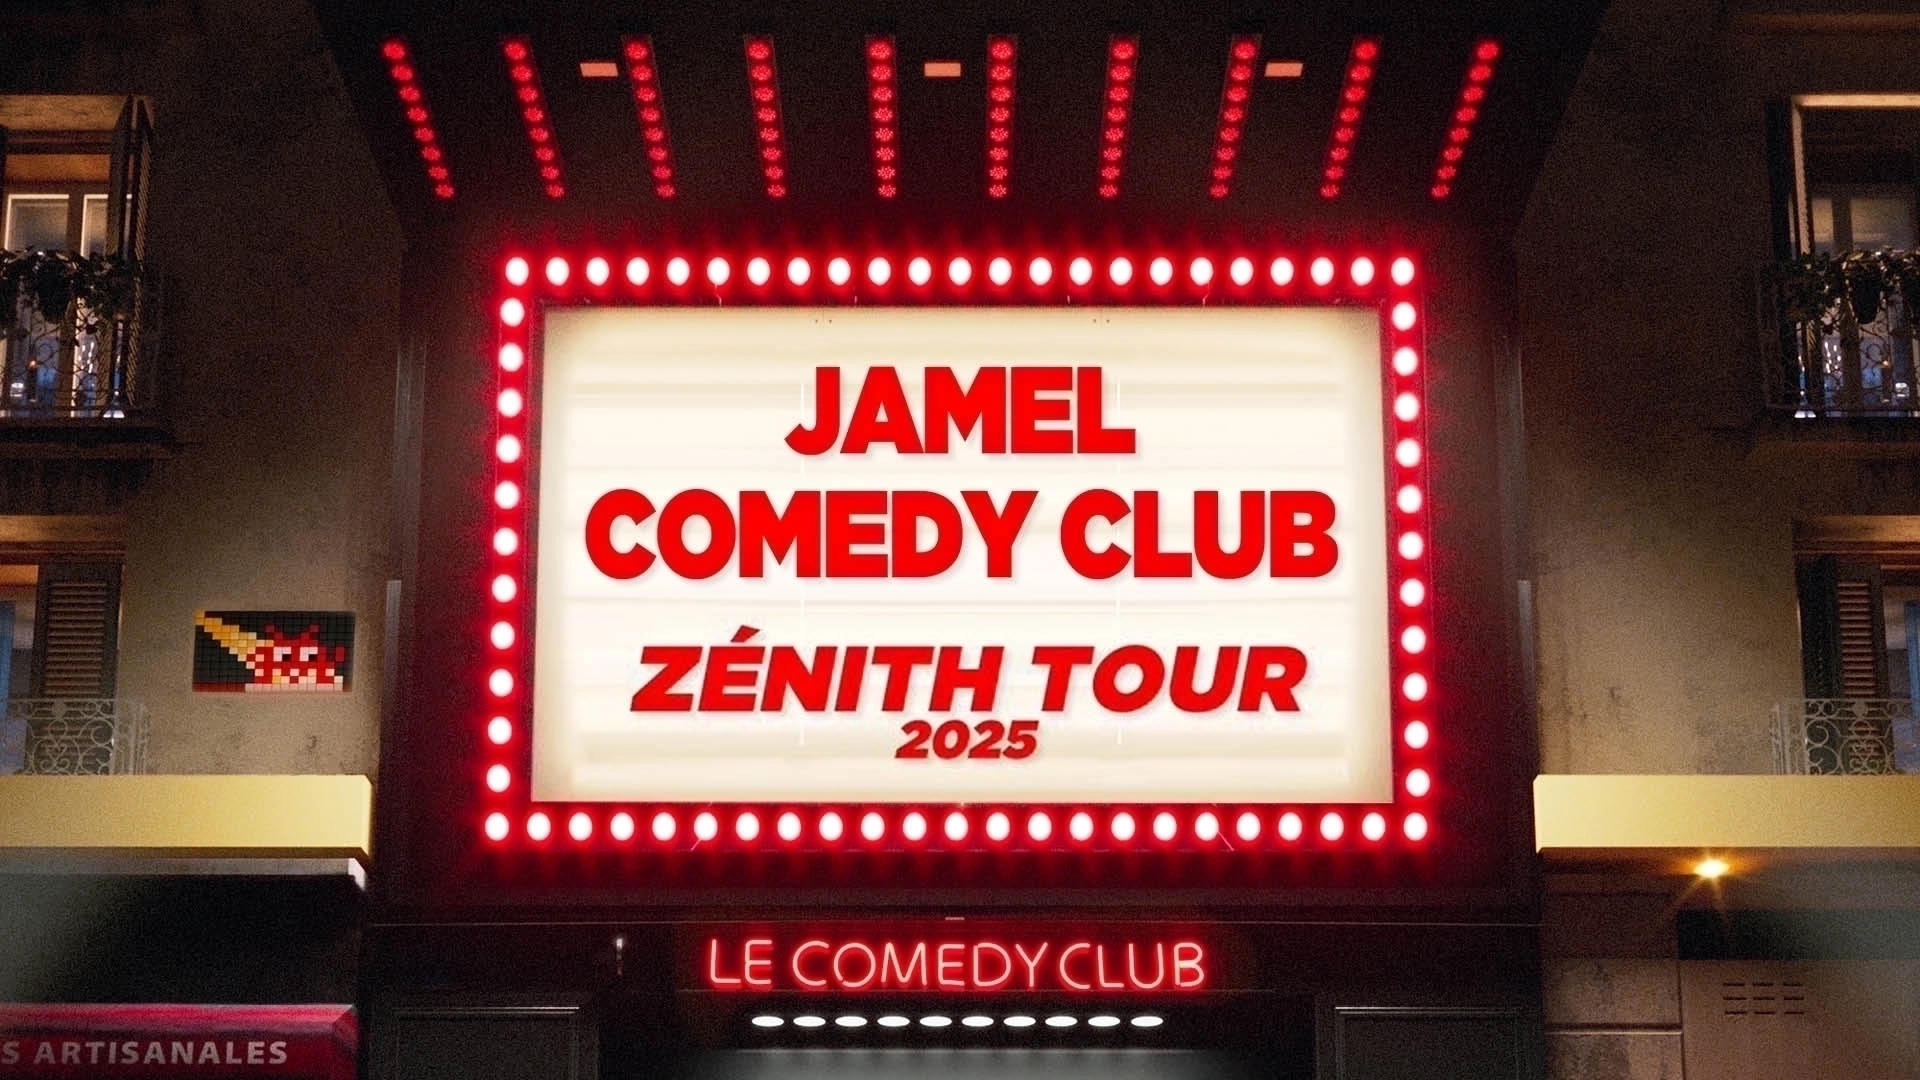 Jamel Comedy Club Zenith Tour 2025 at Rockhal Tickets